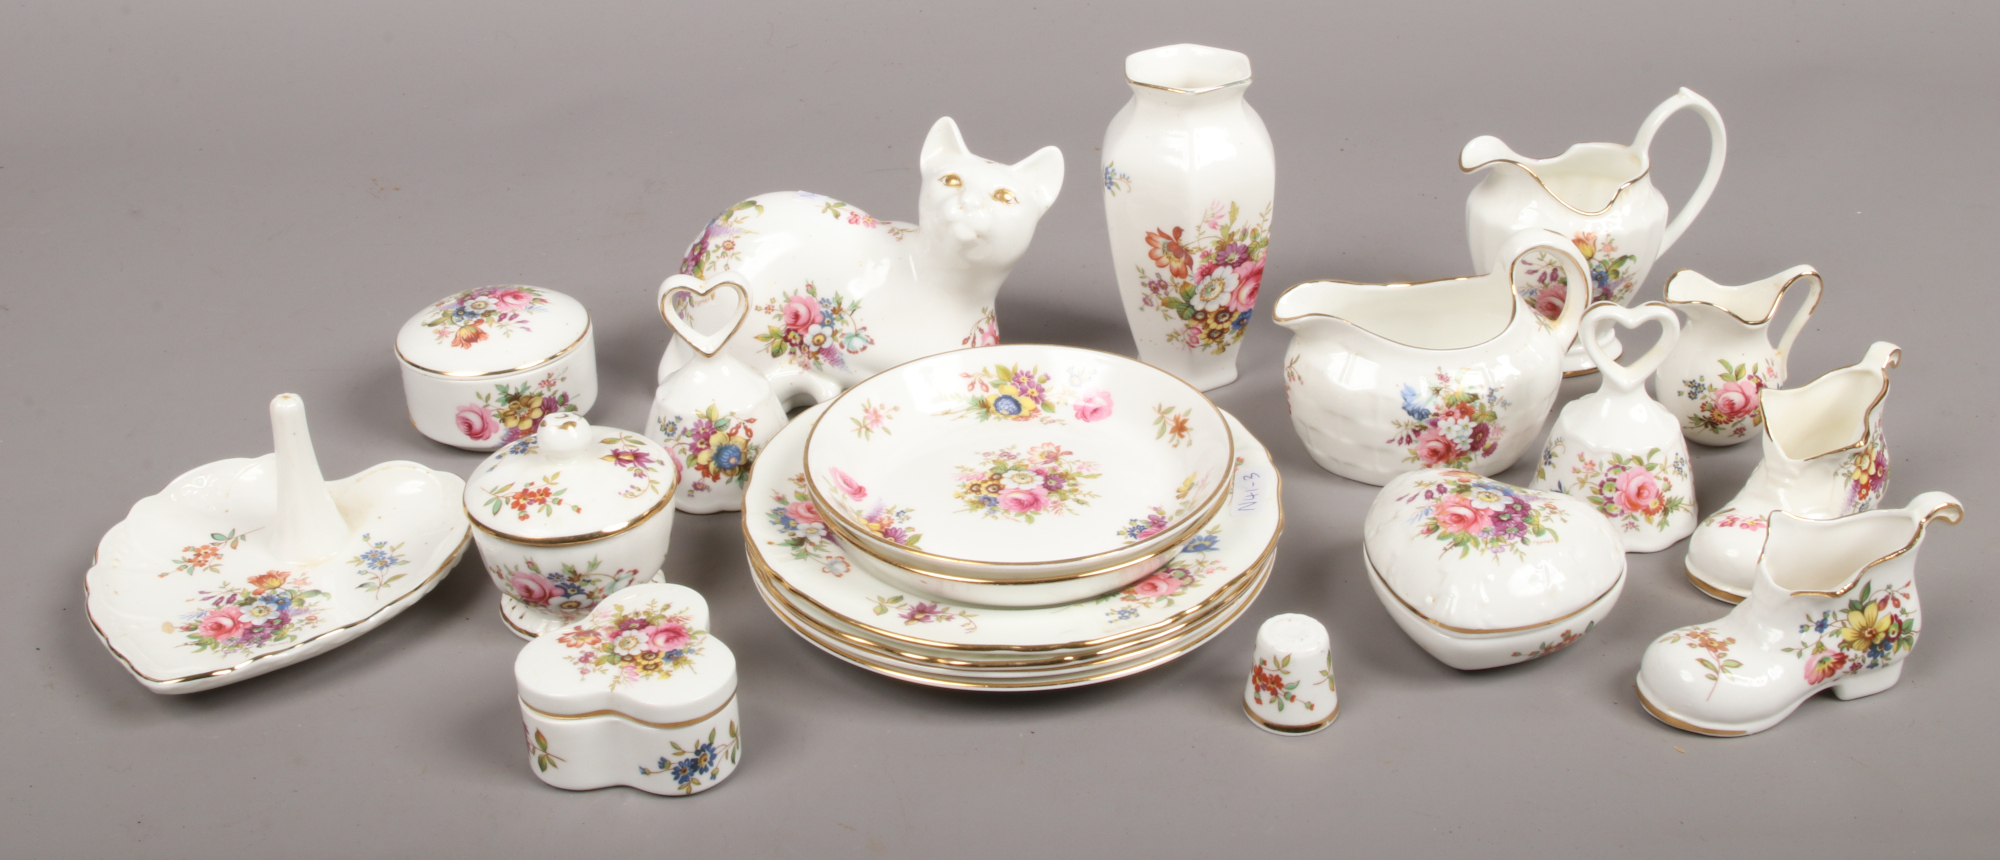 A quantity of Hammersley bone china ornaments, mostly Howard Sprays design.